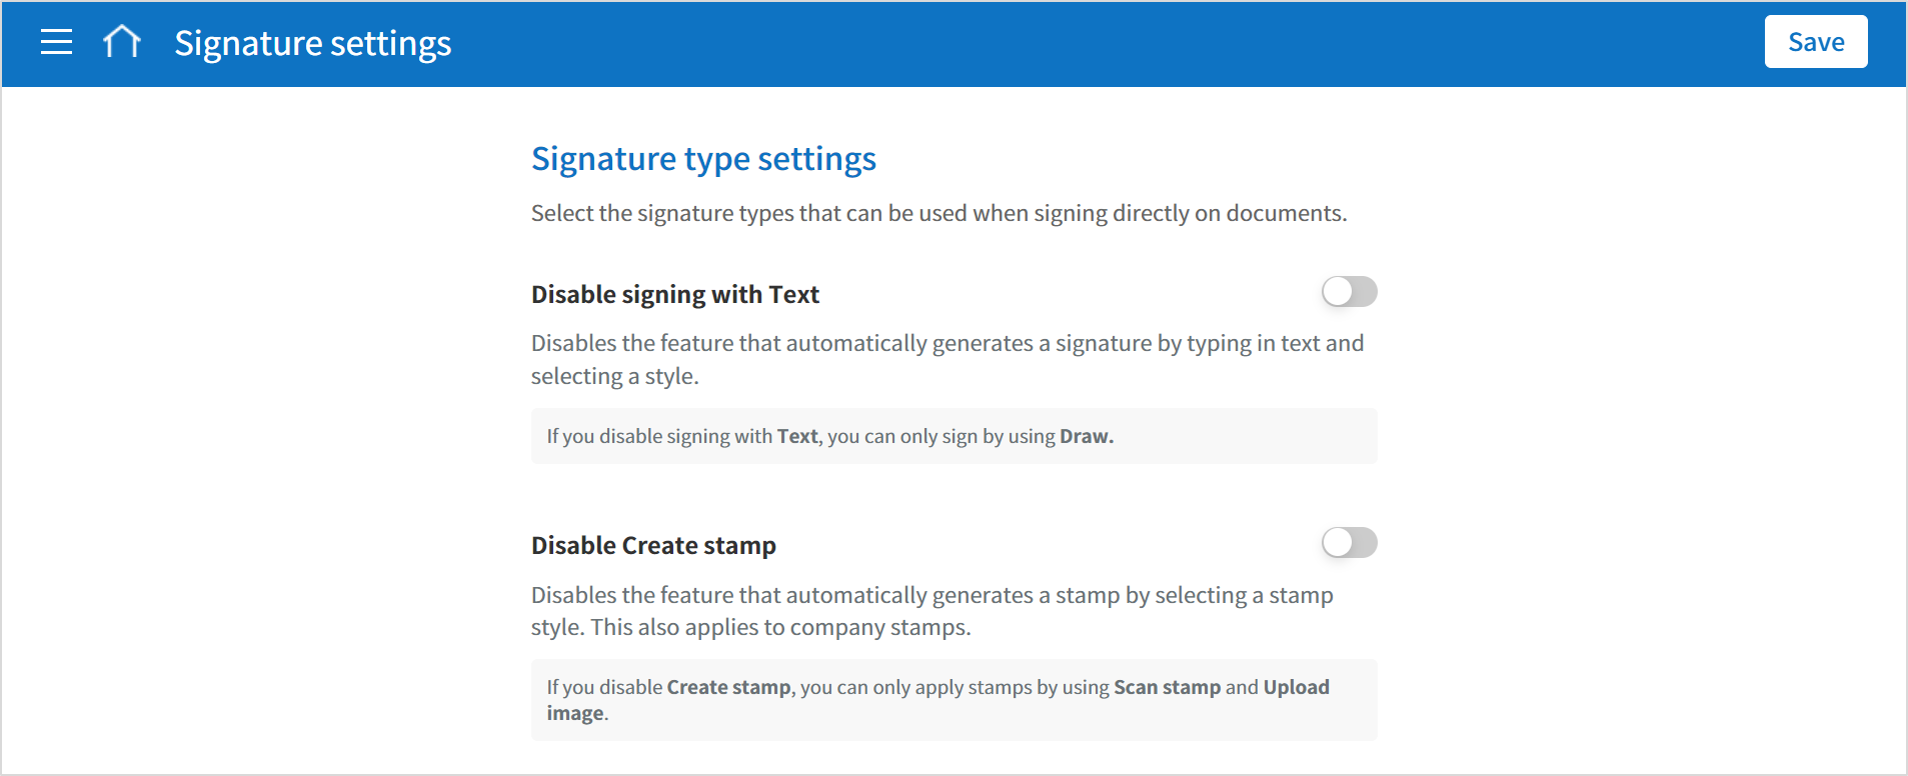 Signature type settings